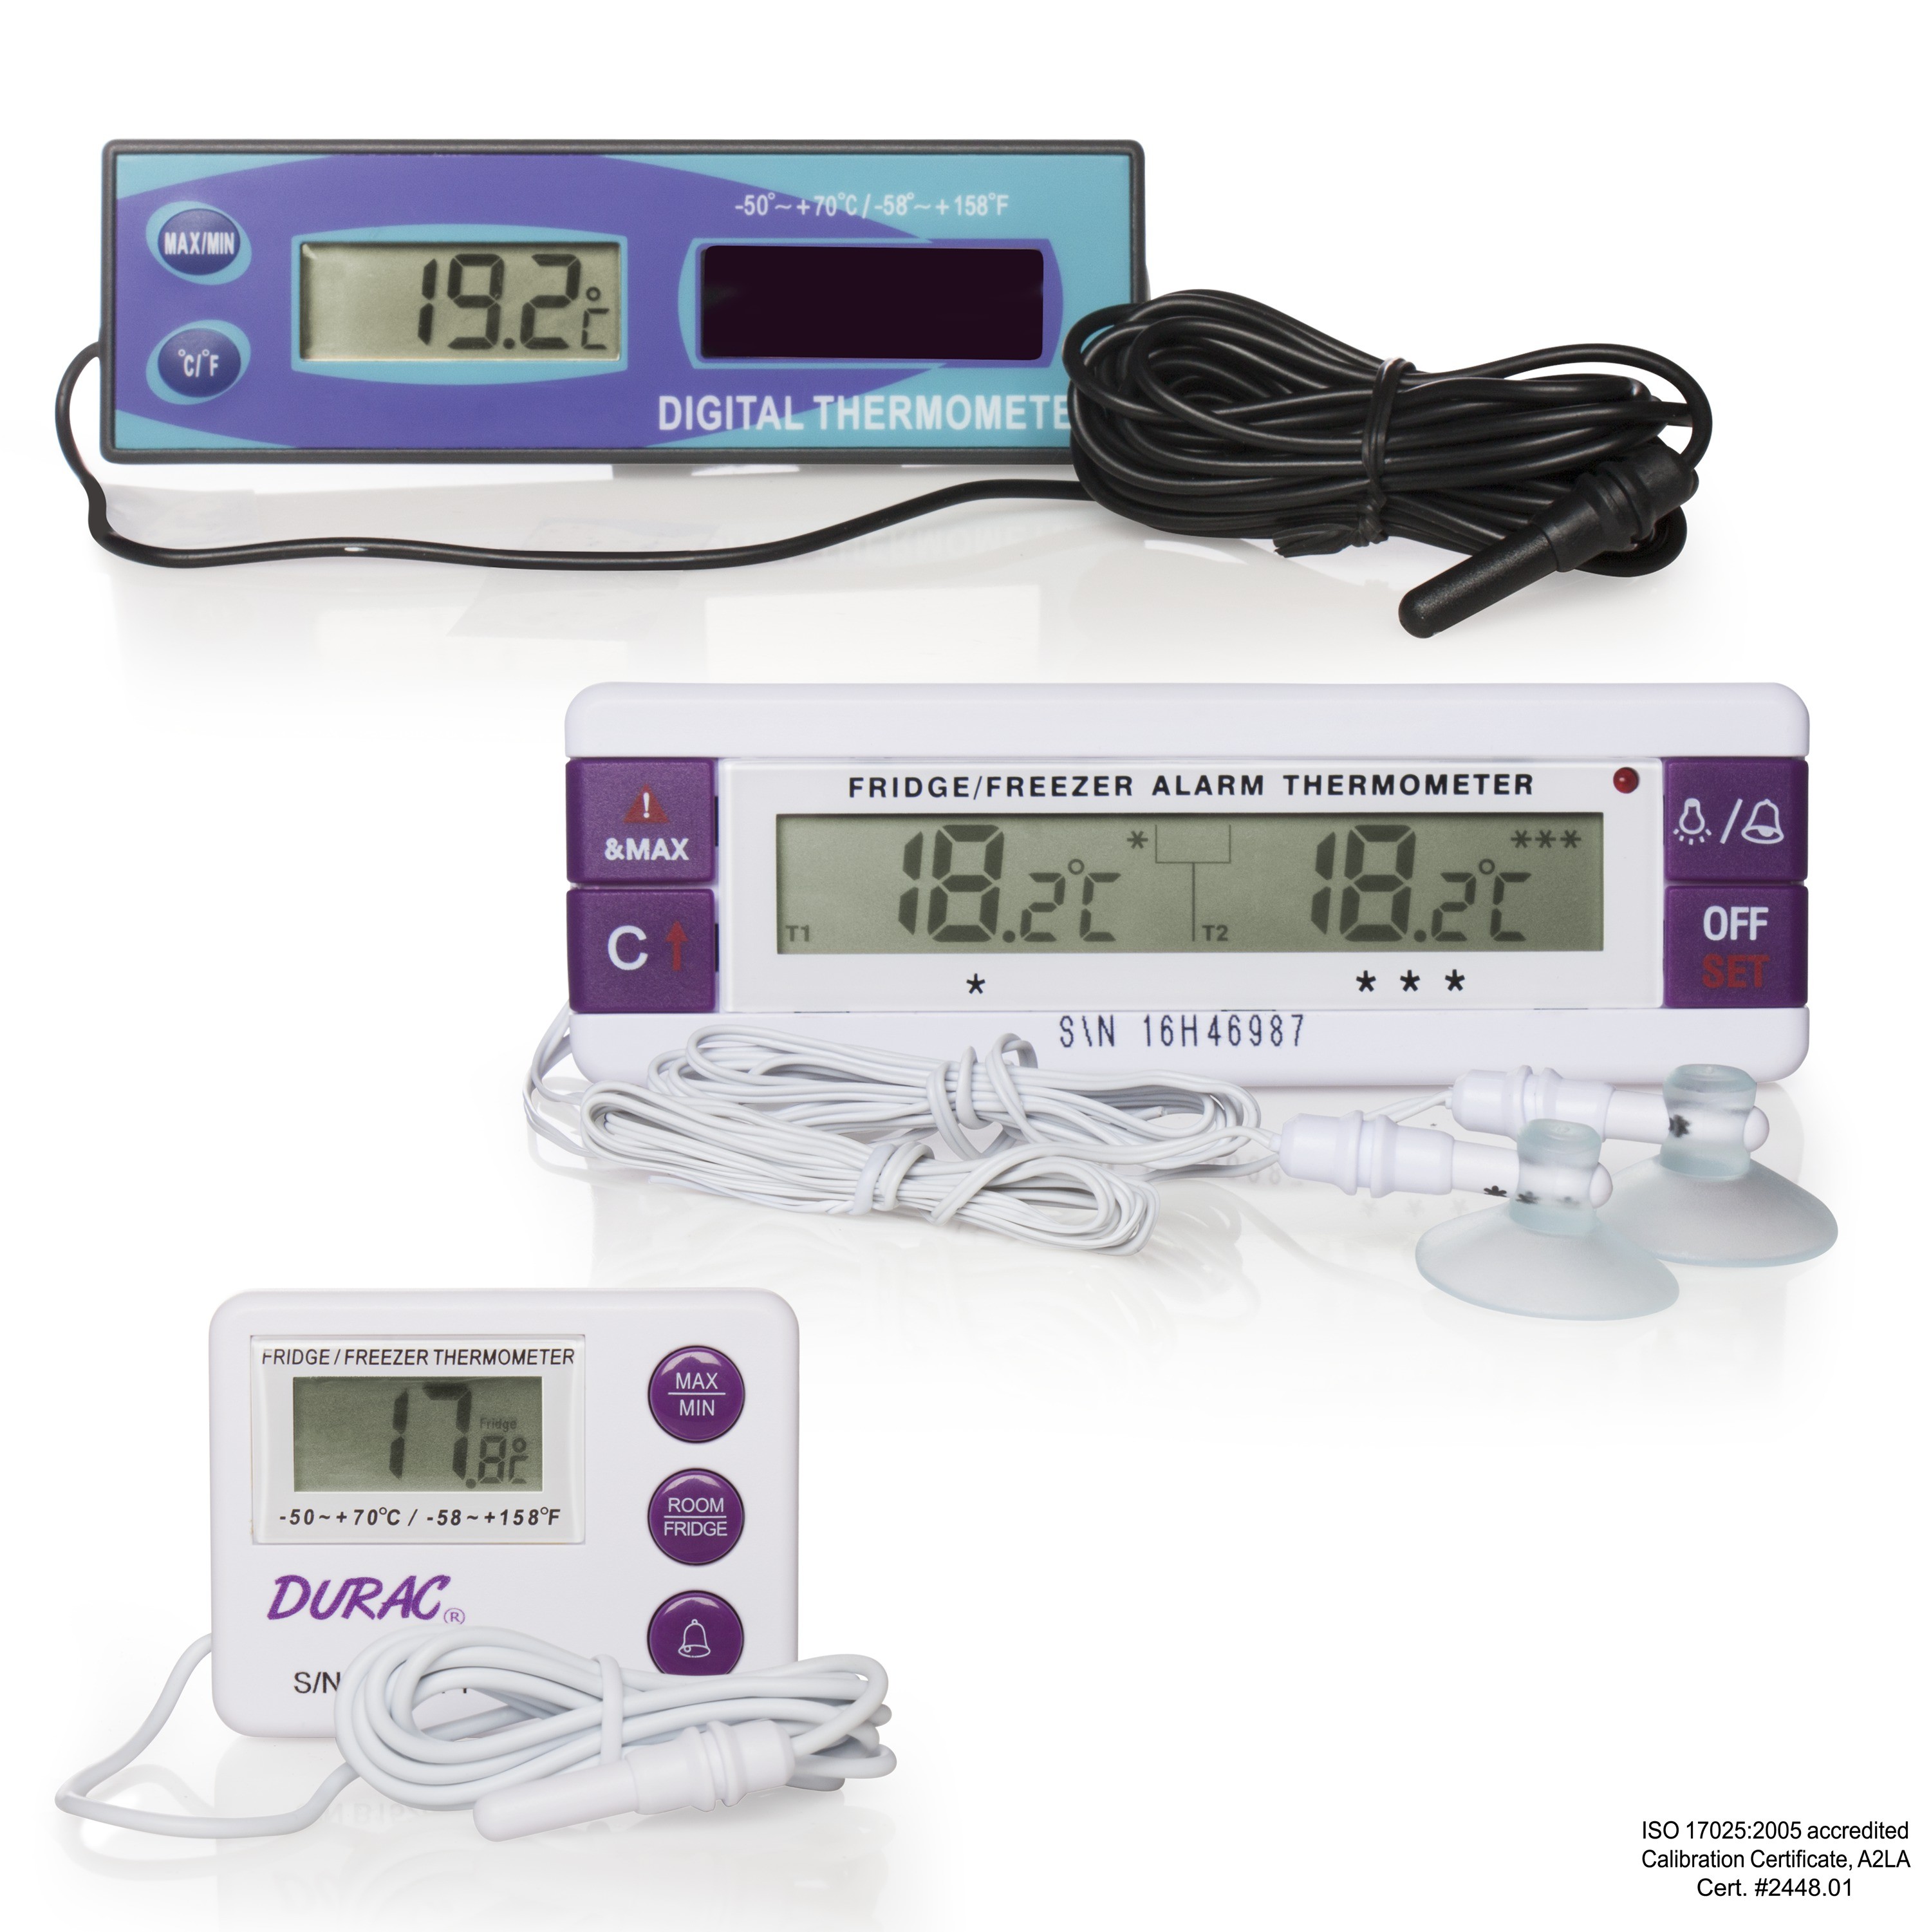 03100 Waterproof Digital Shower Thermometer 0 ~ 69°C Alarm Alert